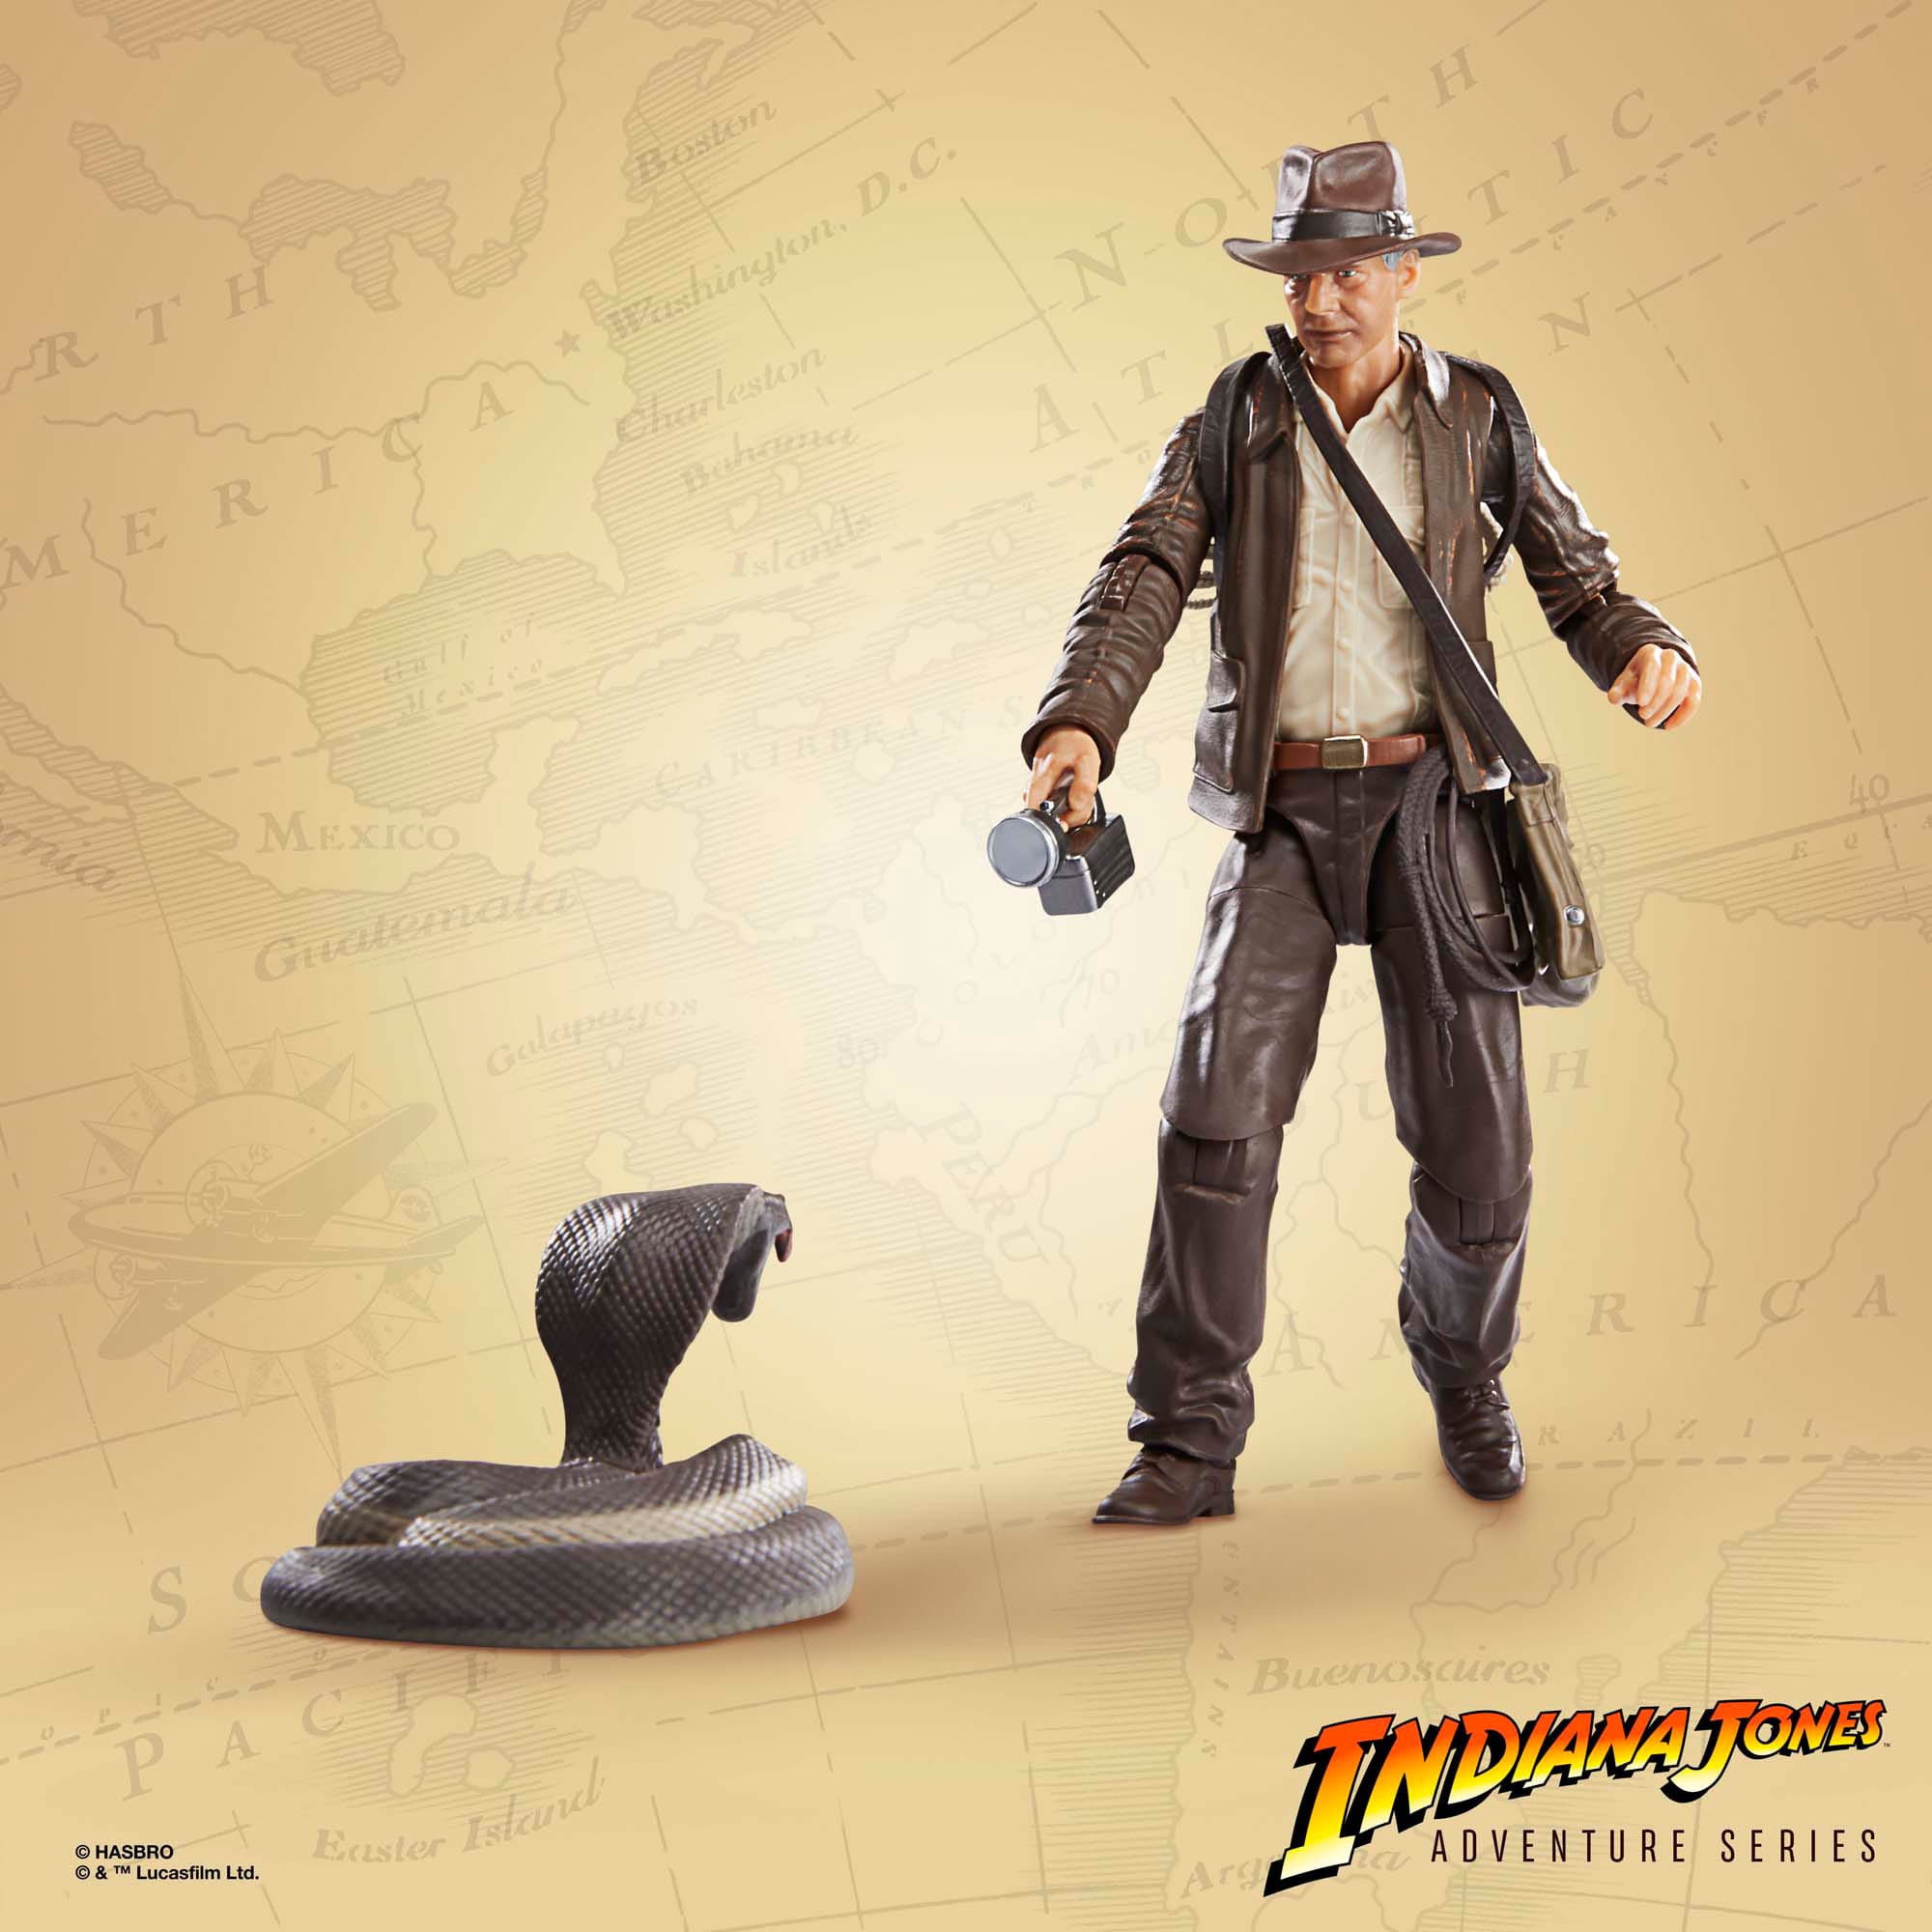 Indiana Jones Adventure Series Actionfigur Indiana Jones (Indiana Jones und das Rad des Schicksals)  F60675X0 5010994167943